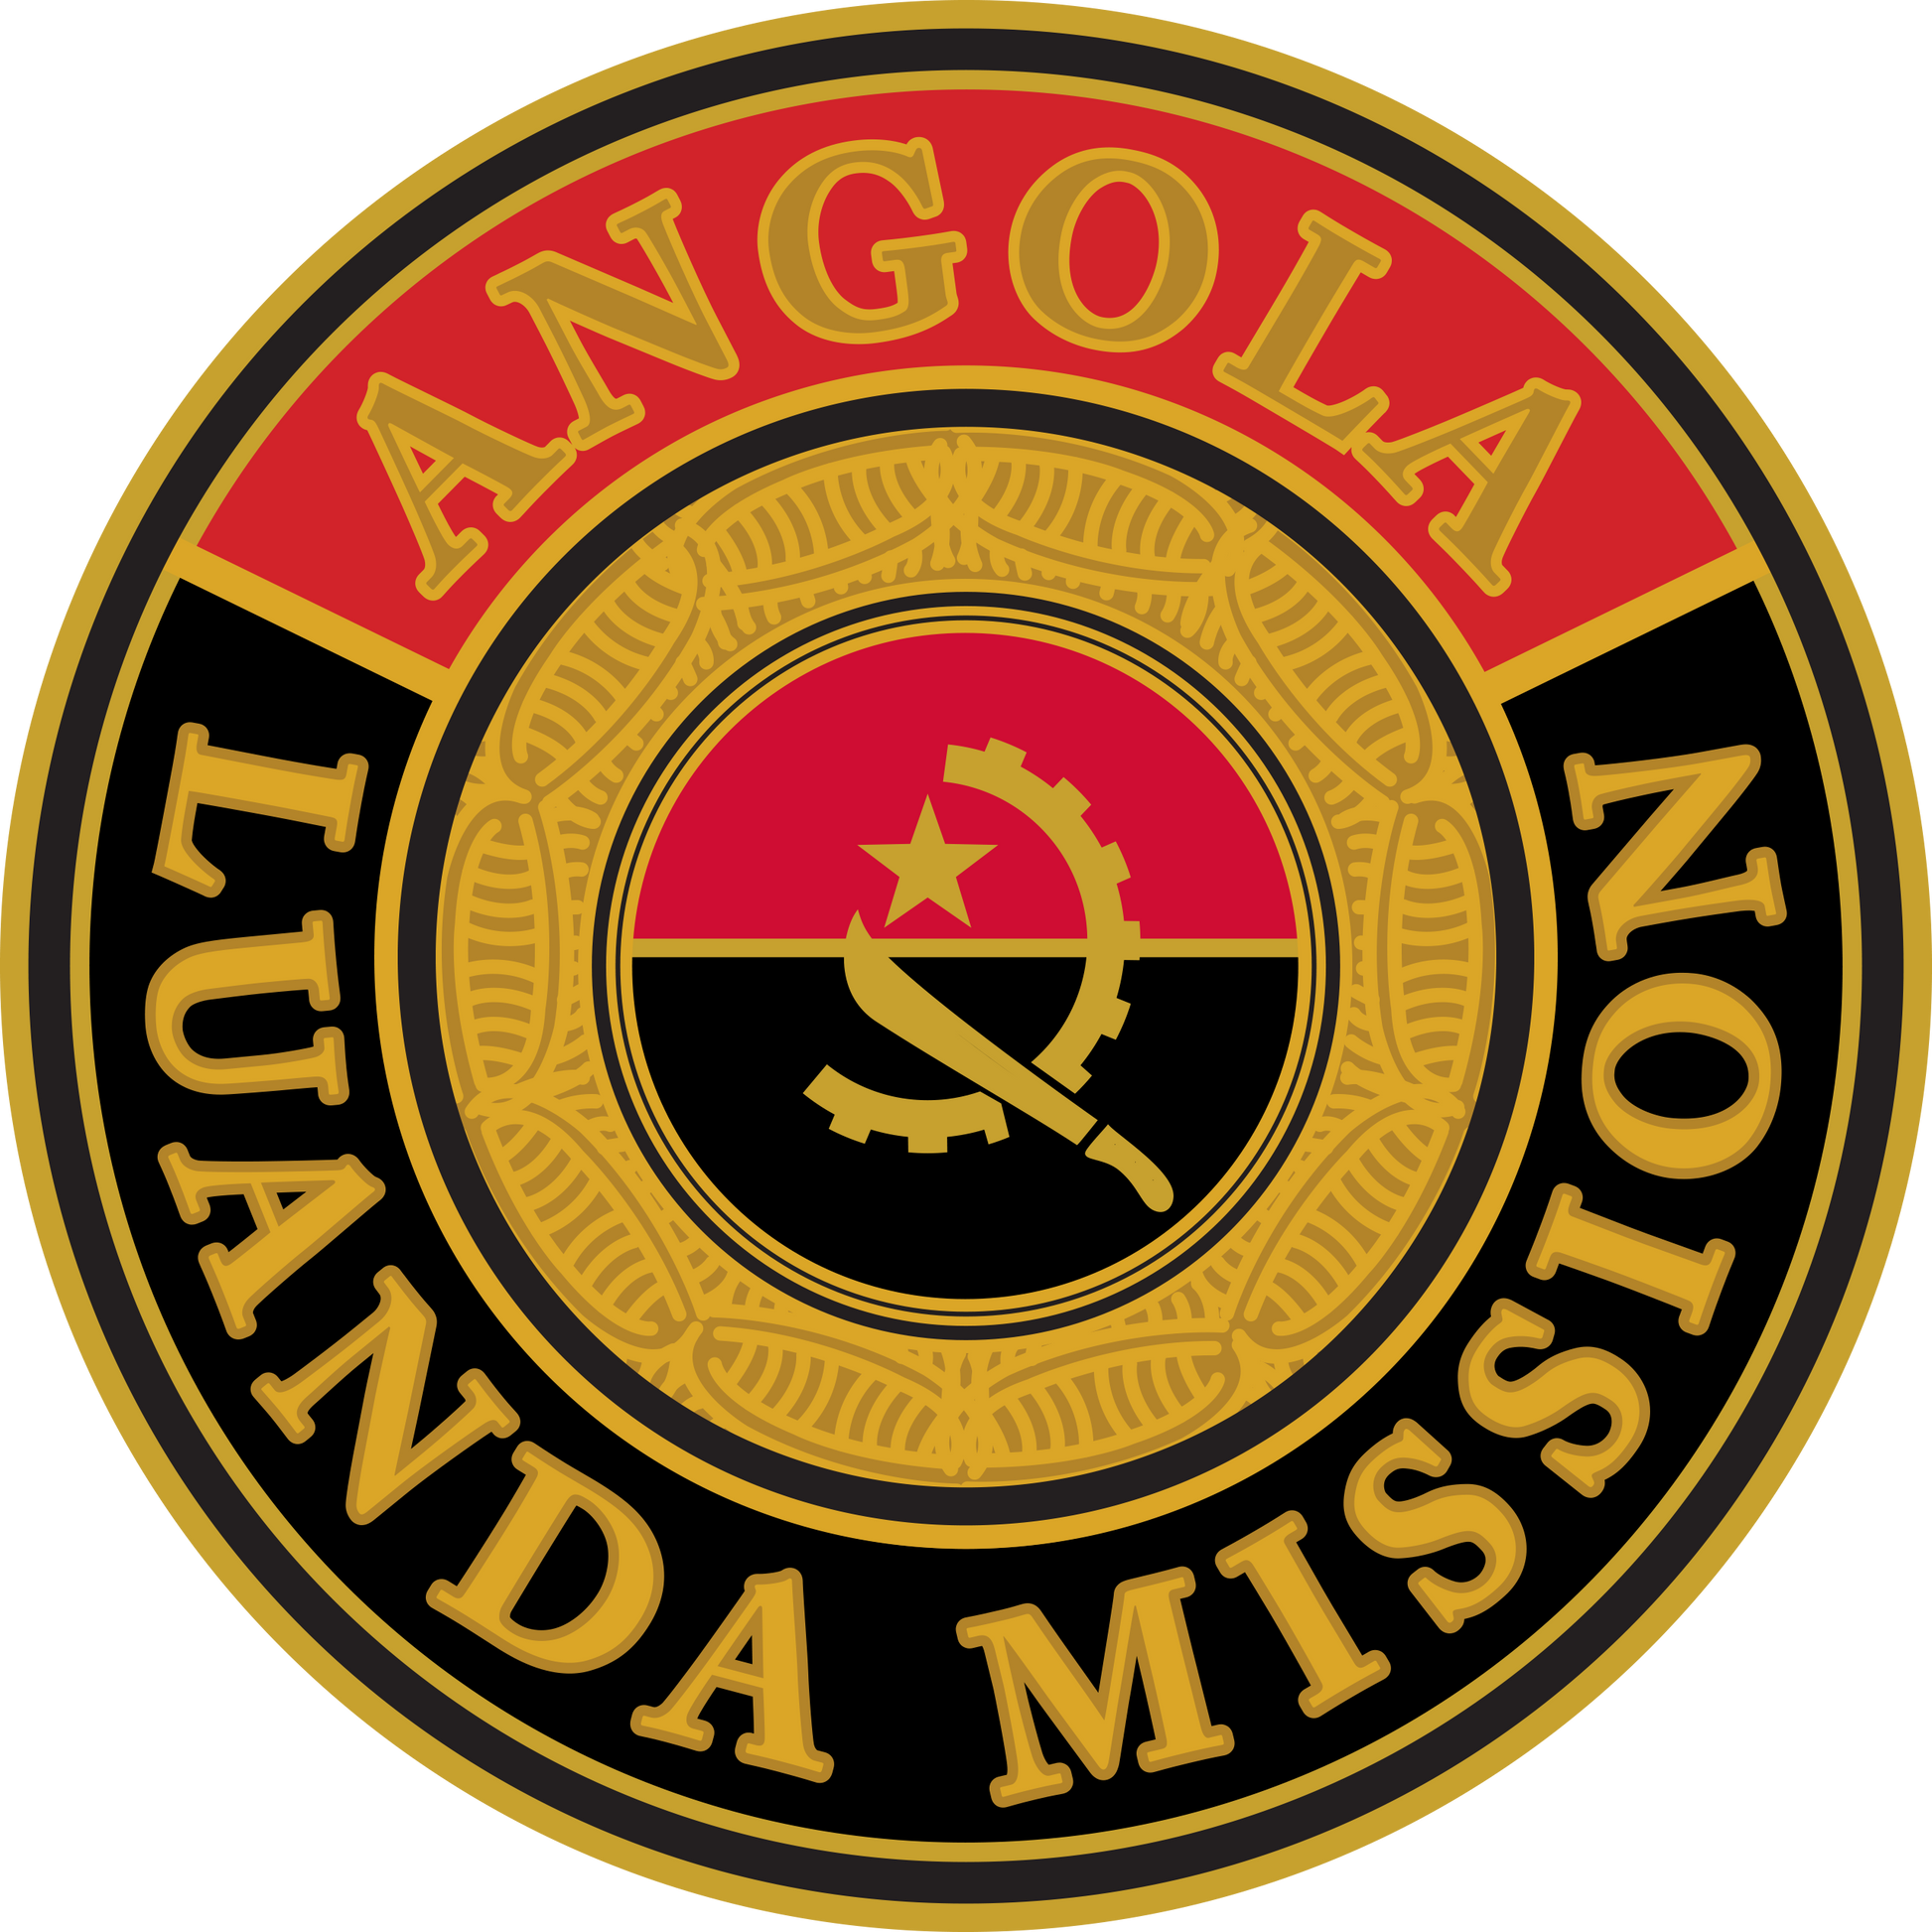 angola luanda mission decal